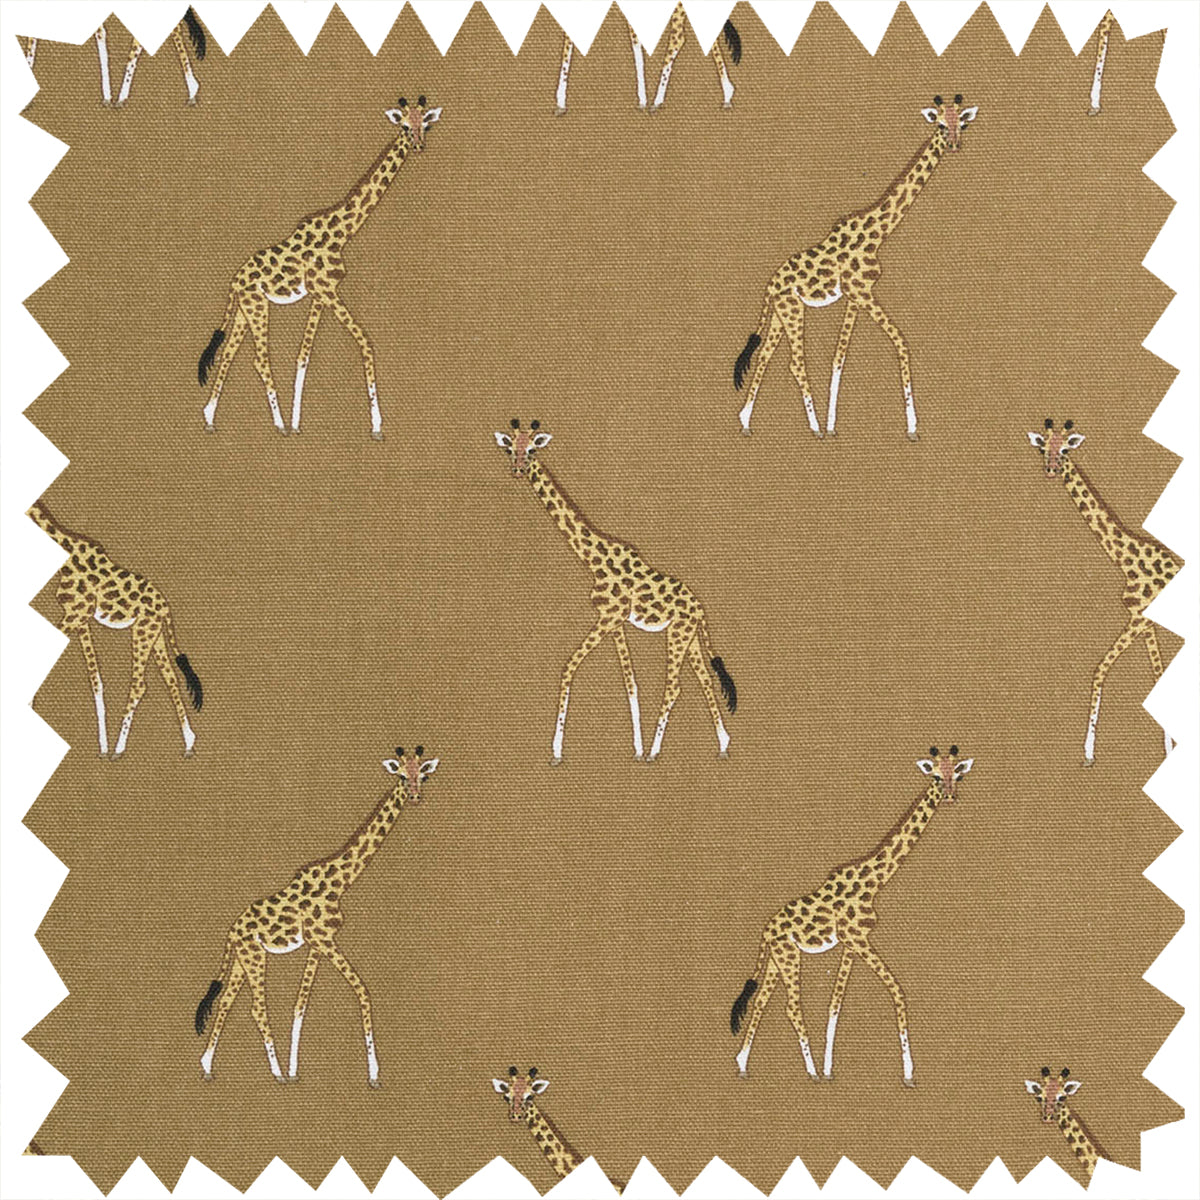 Giraffe Fabric Sample by Sophie Allport